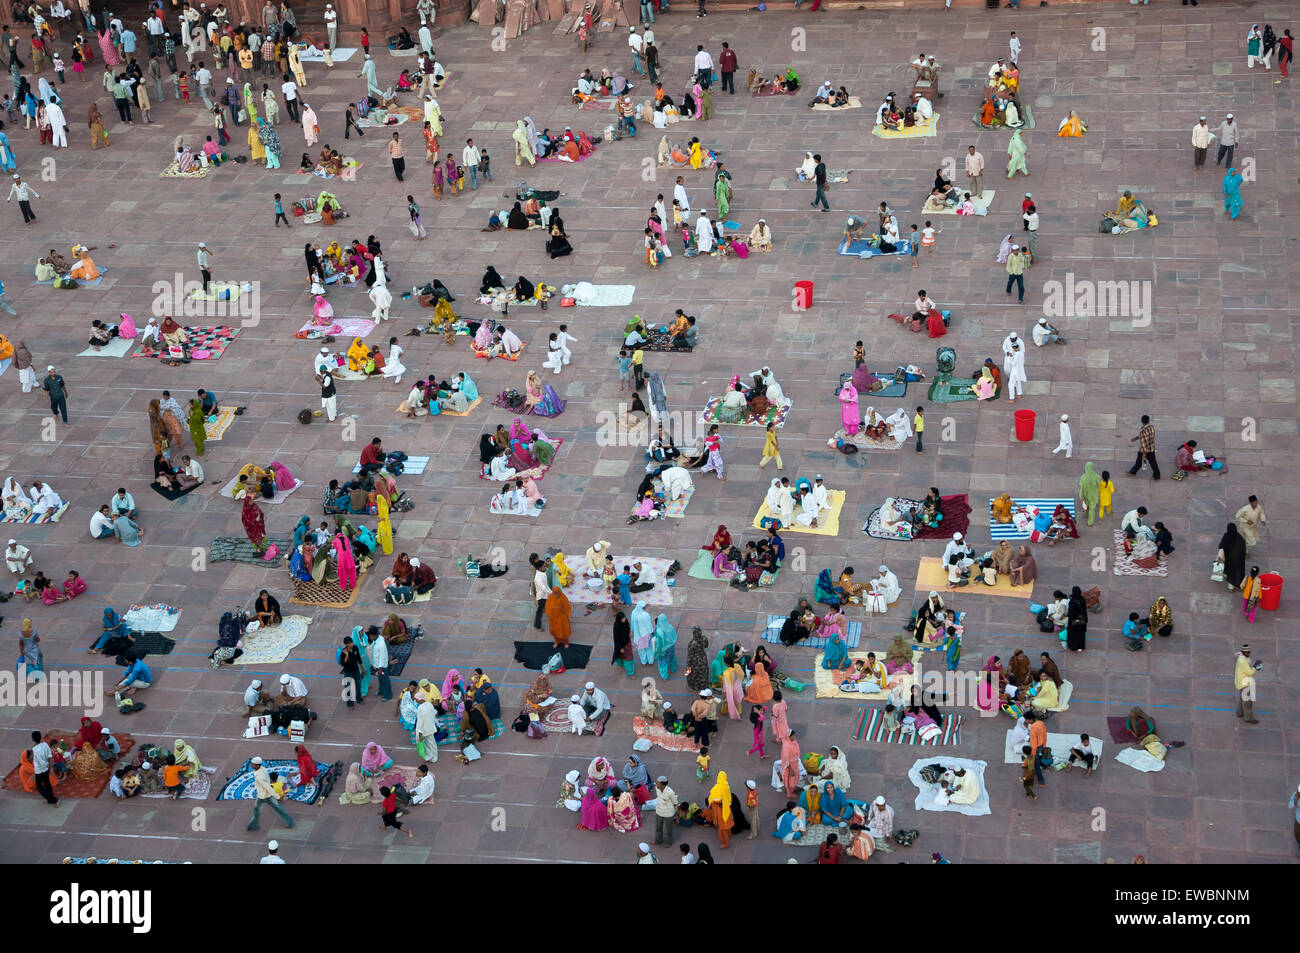 People gathered in Jama Masjid during Ramadan. Old Delhi, India. Stock Photo